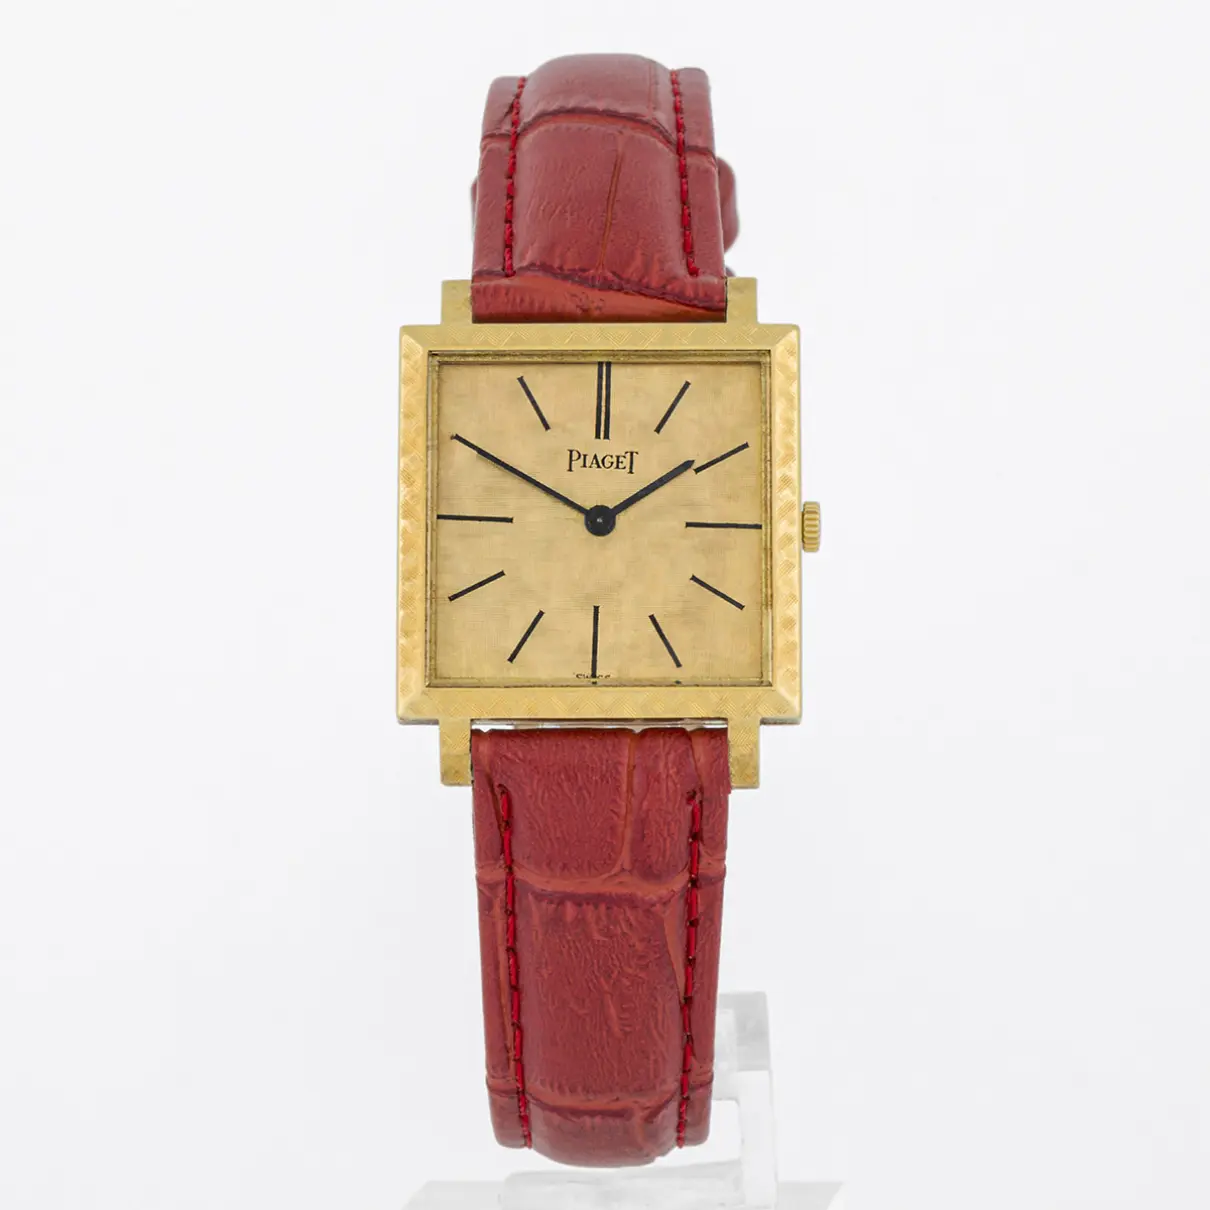 Buy Piaget Yellow gold watch online